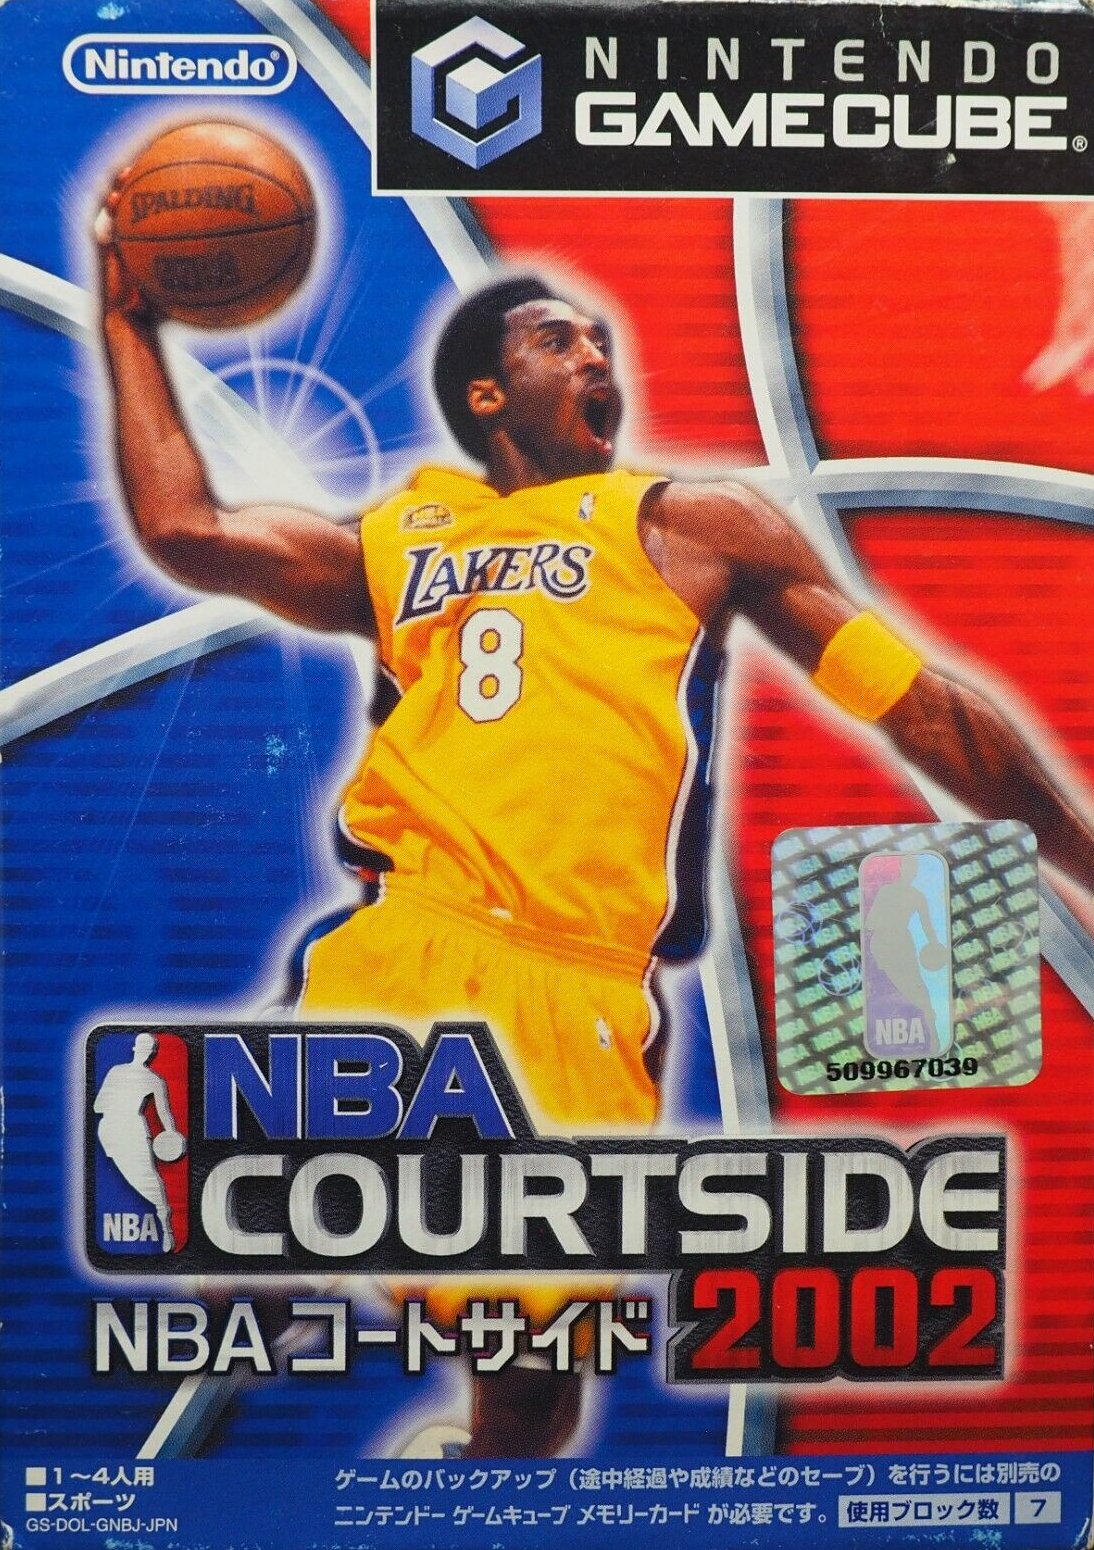 Game | Nintendo GameCube | NBA Courtside 2002 [Japan]